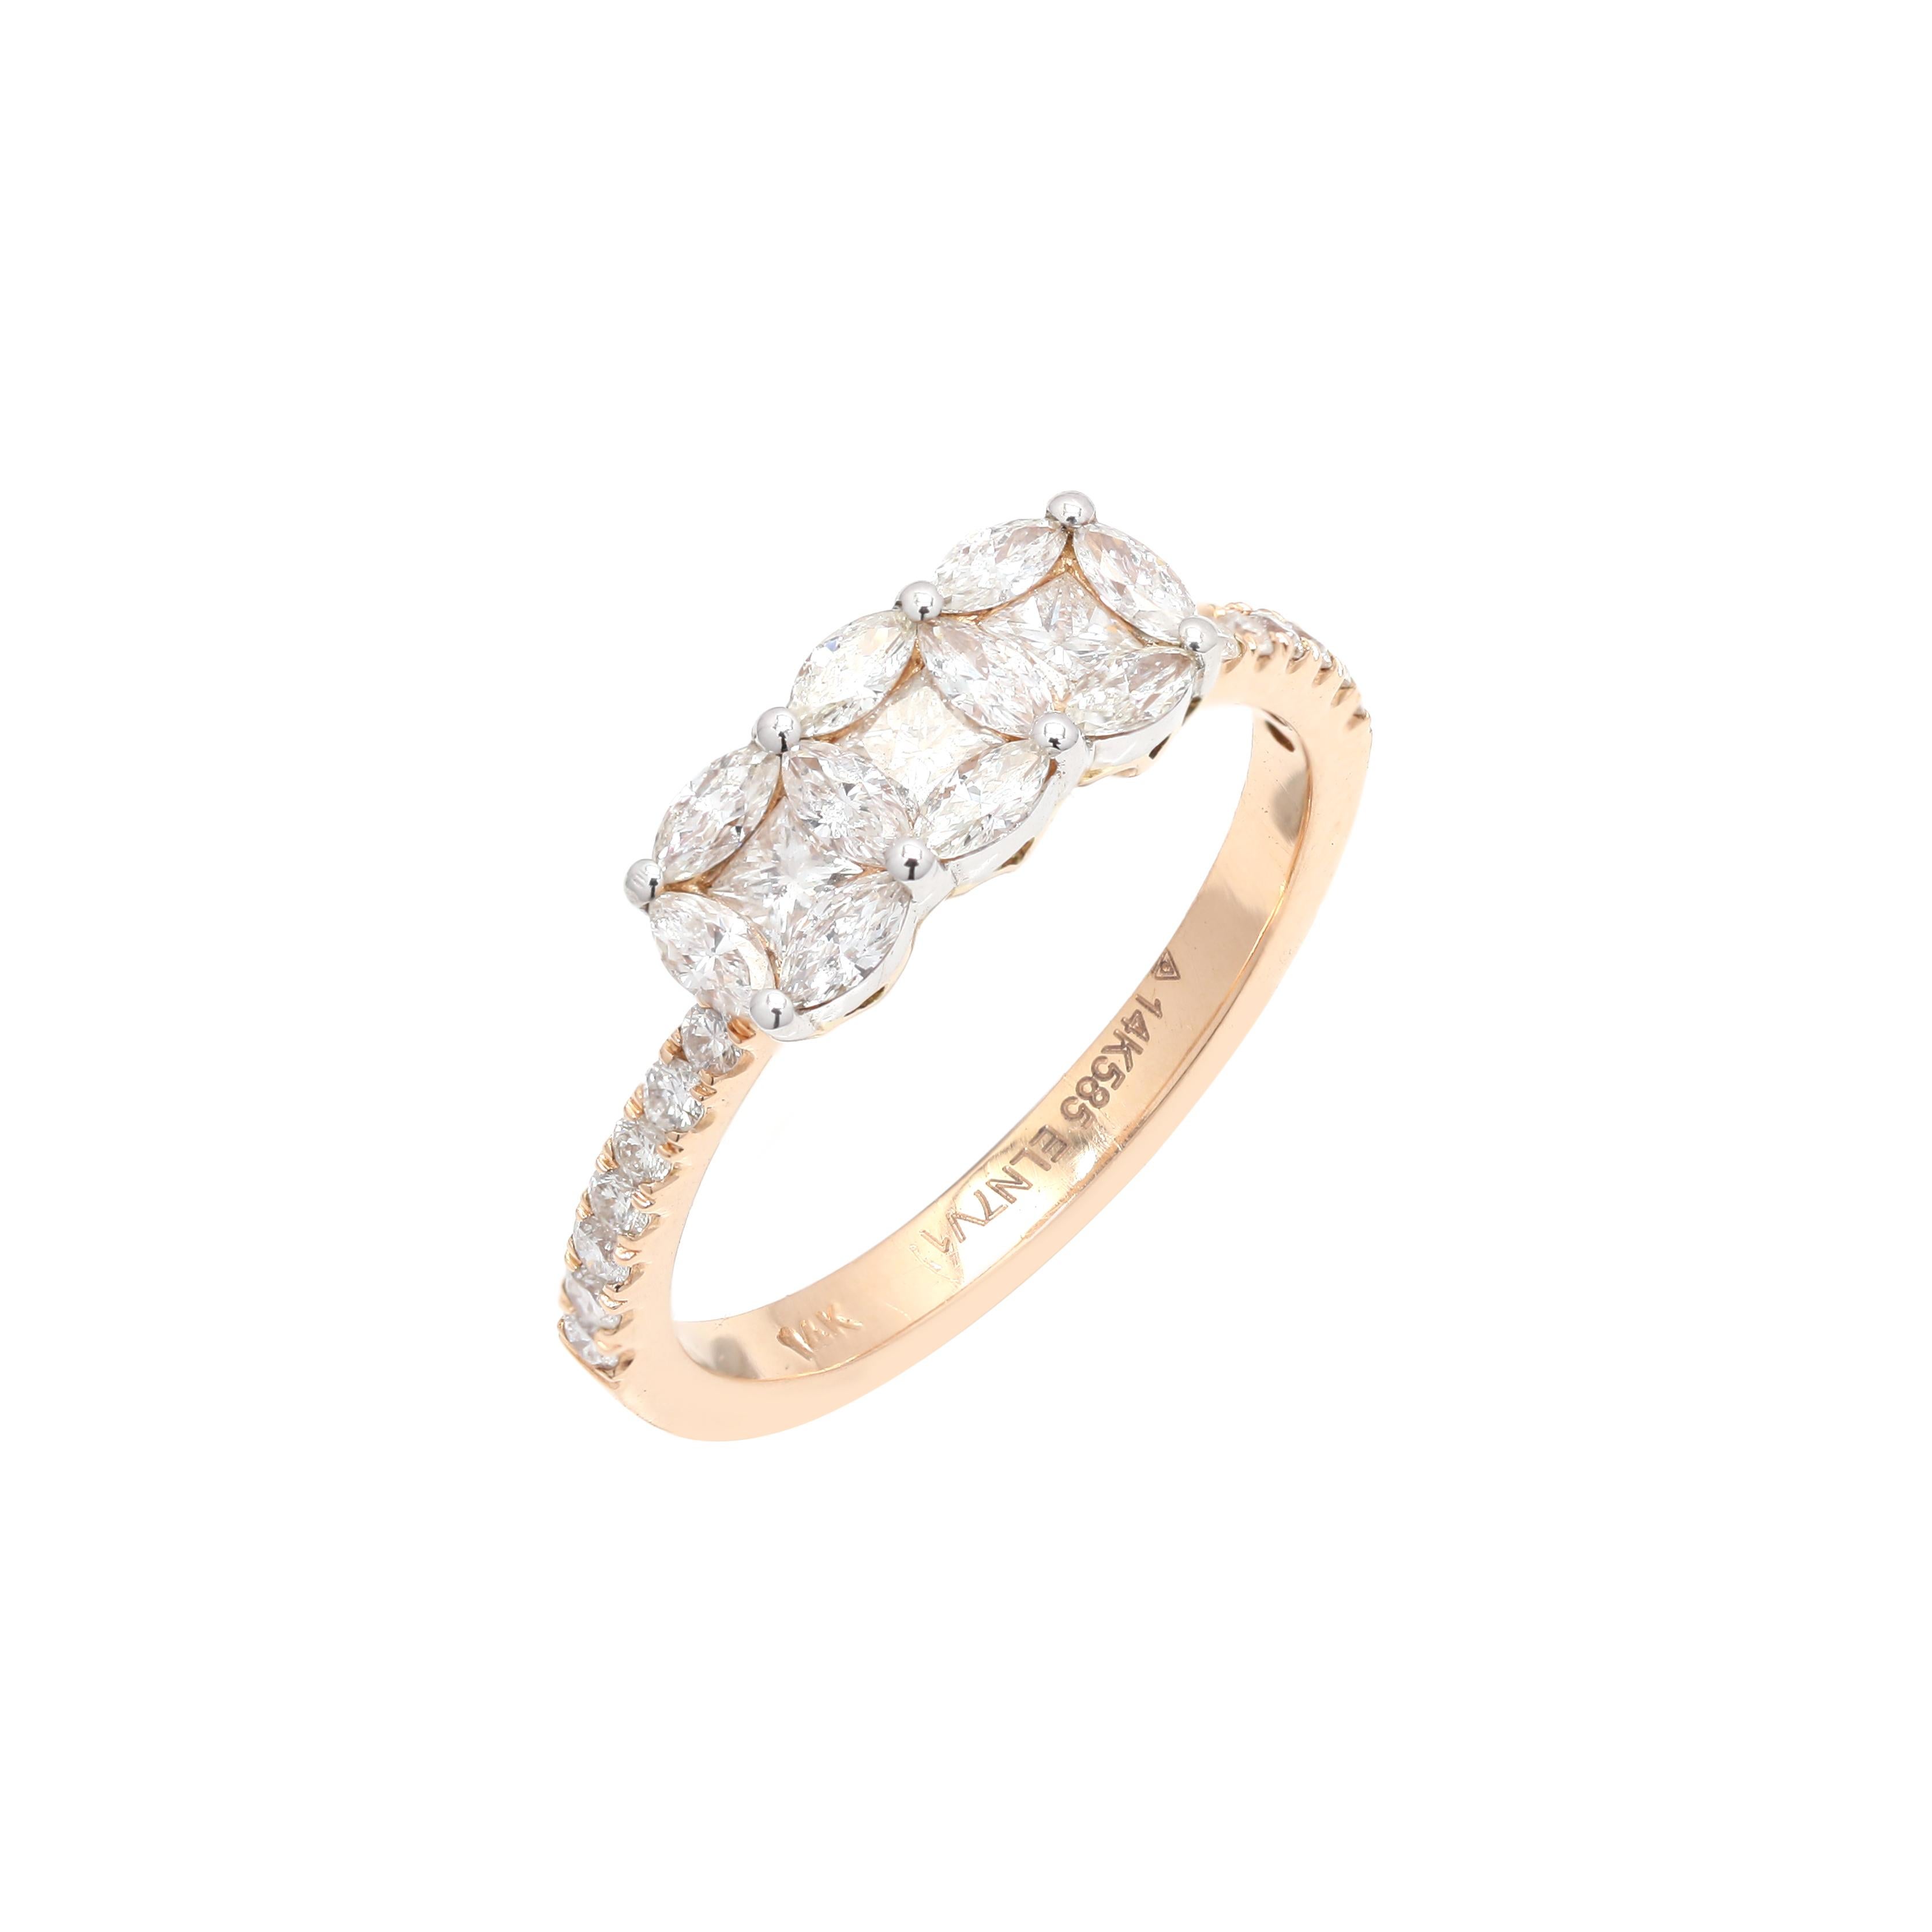 For Sale:  14k Yellow Gold Bespoke 0.78 Carat Brilliant Diamond Engagement Ring 5